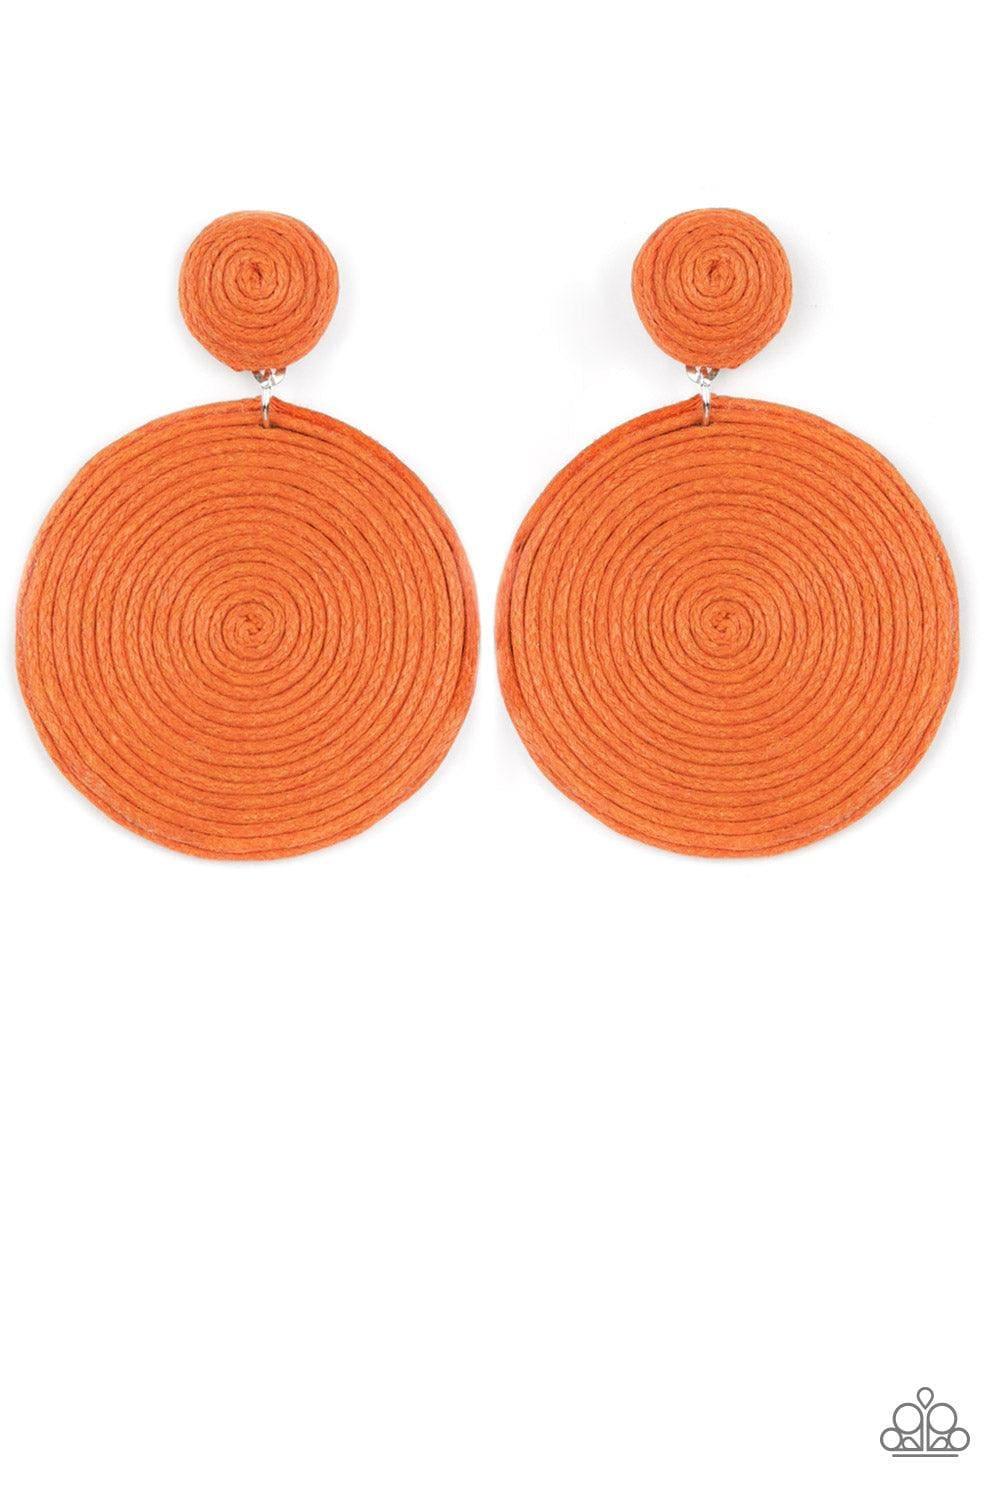 Paparazzi Accessories - Circulate The Room - Orange Earrings - Bling by JessieK